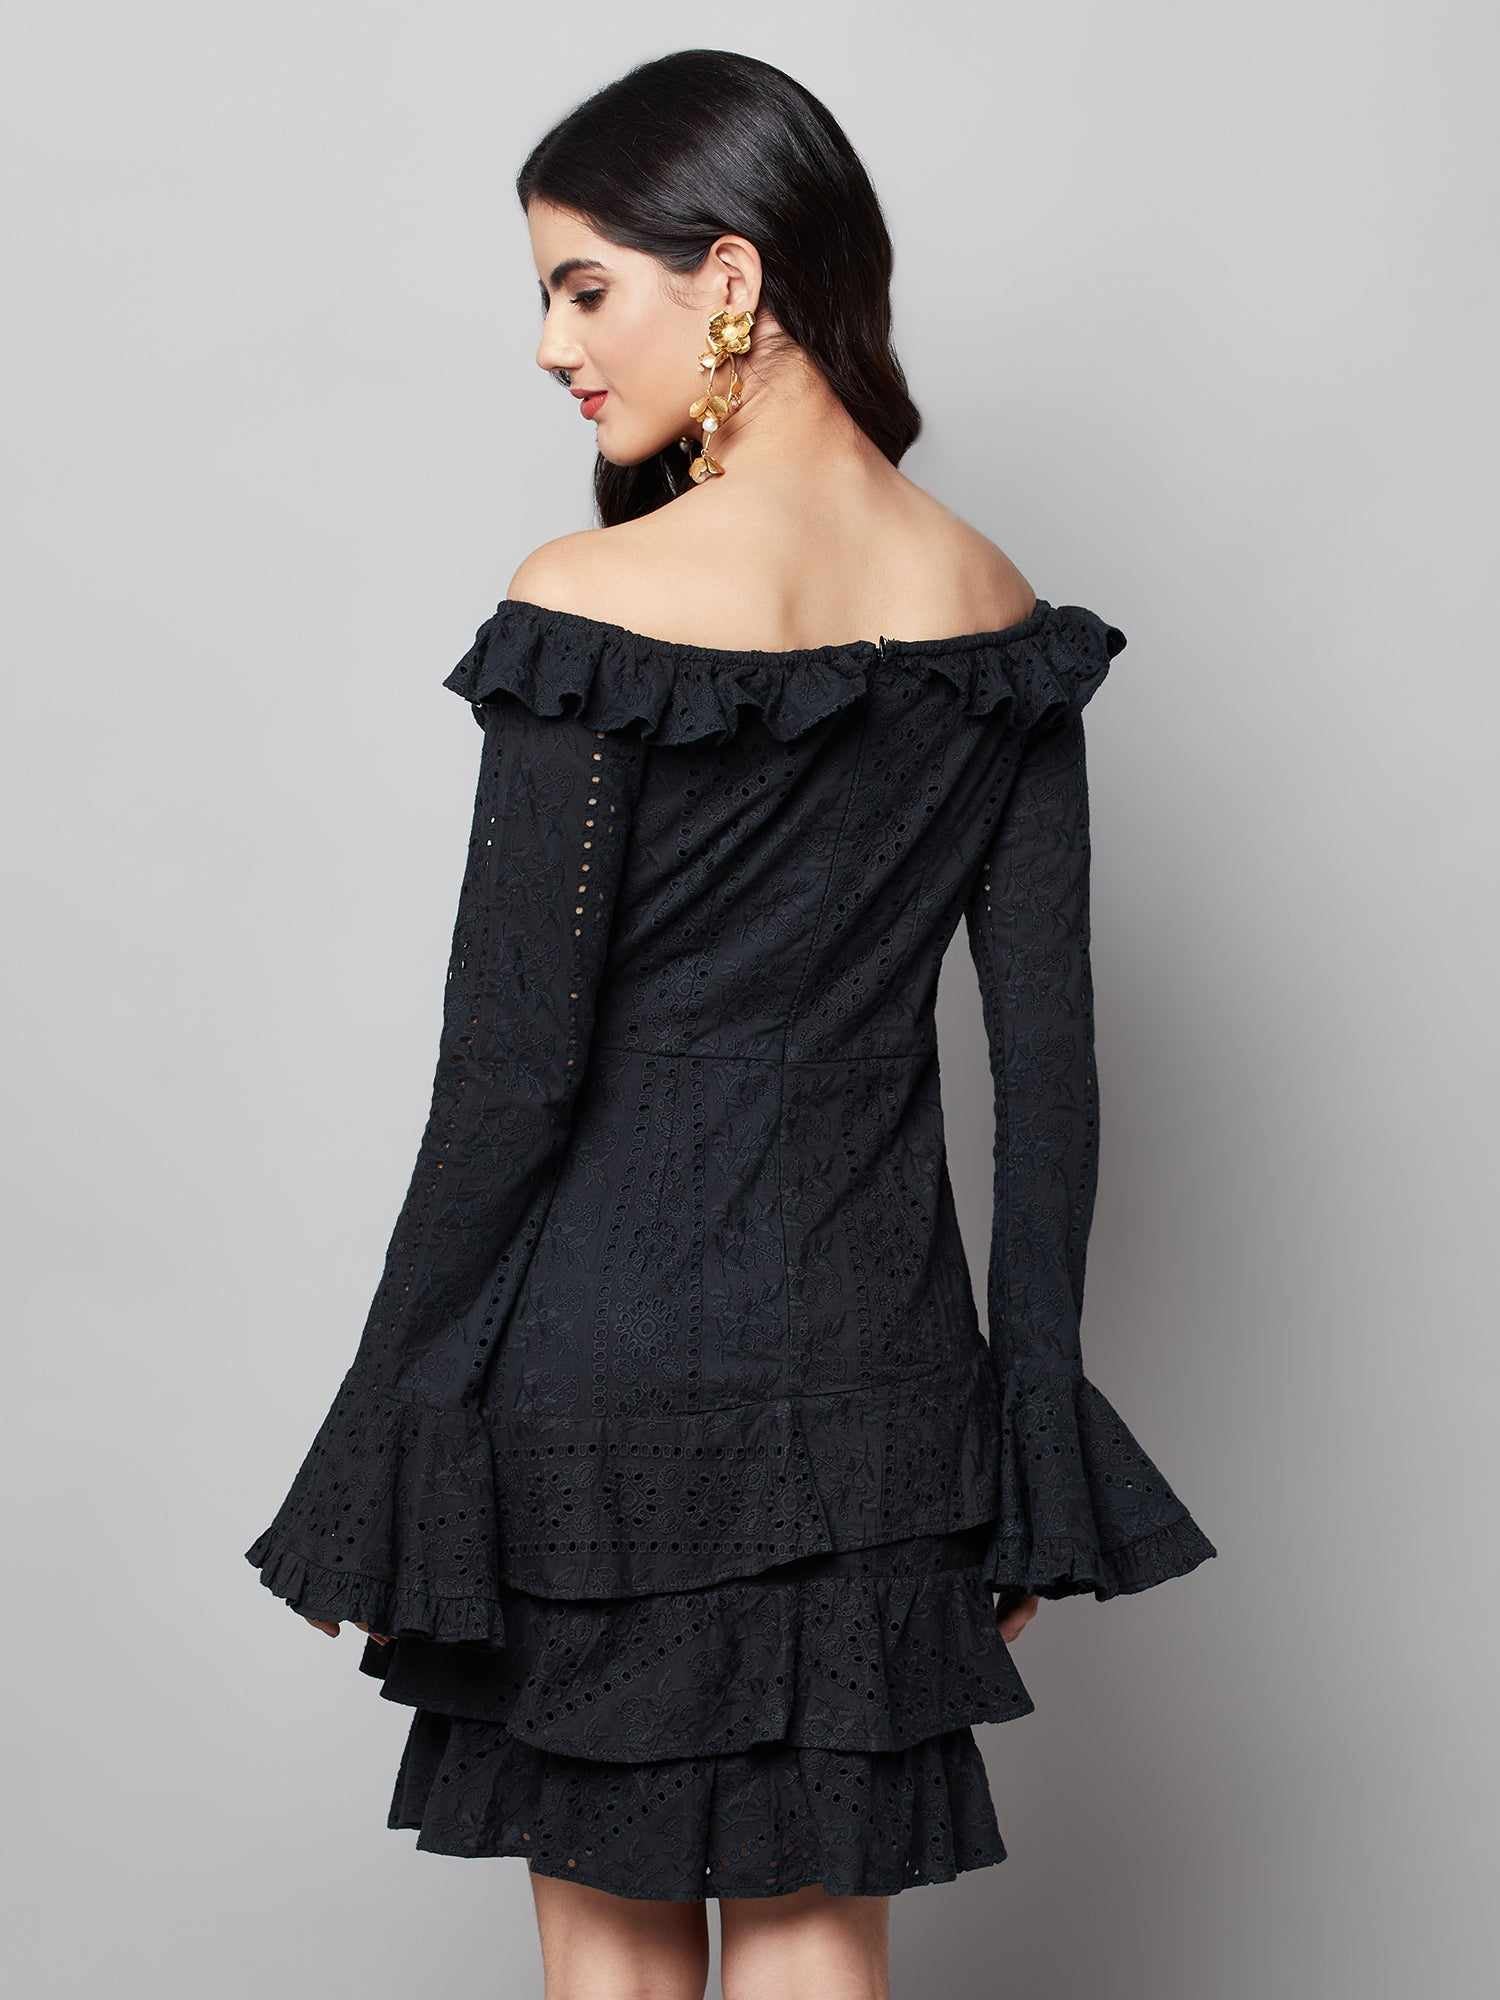 regal ruffle noir black dress